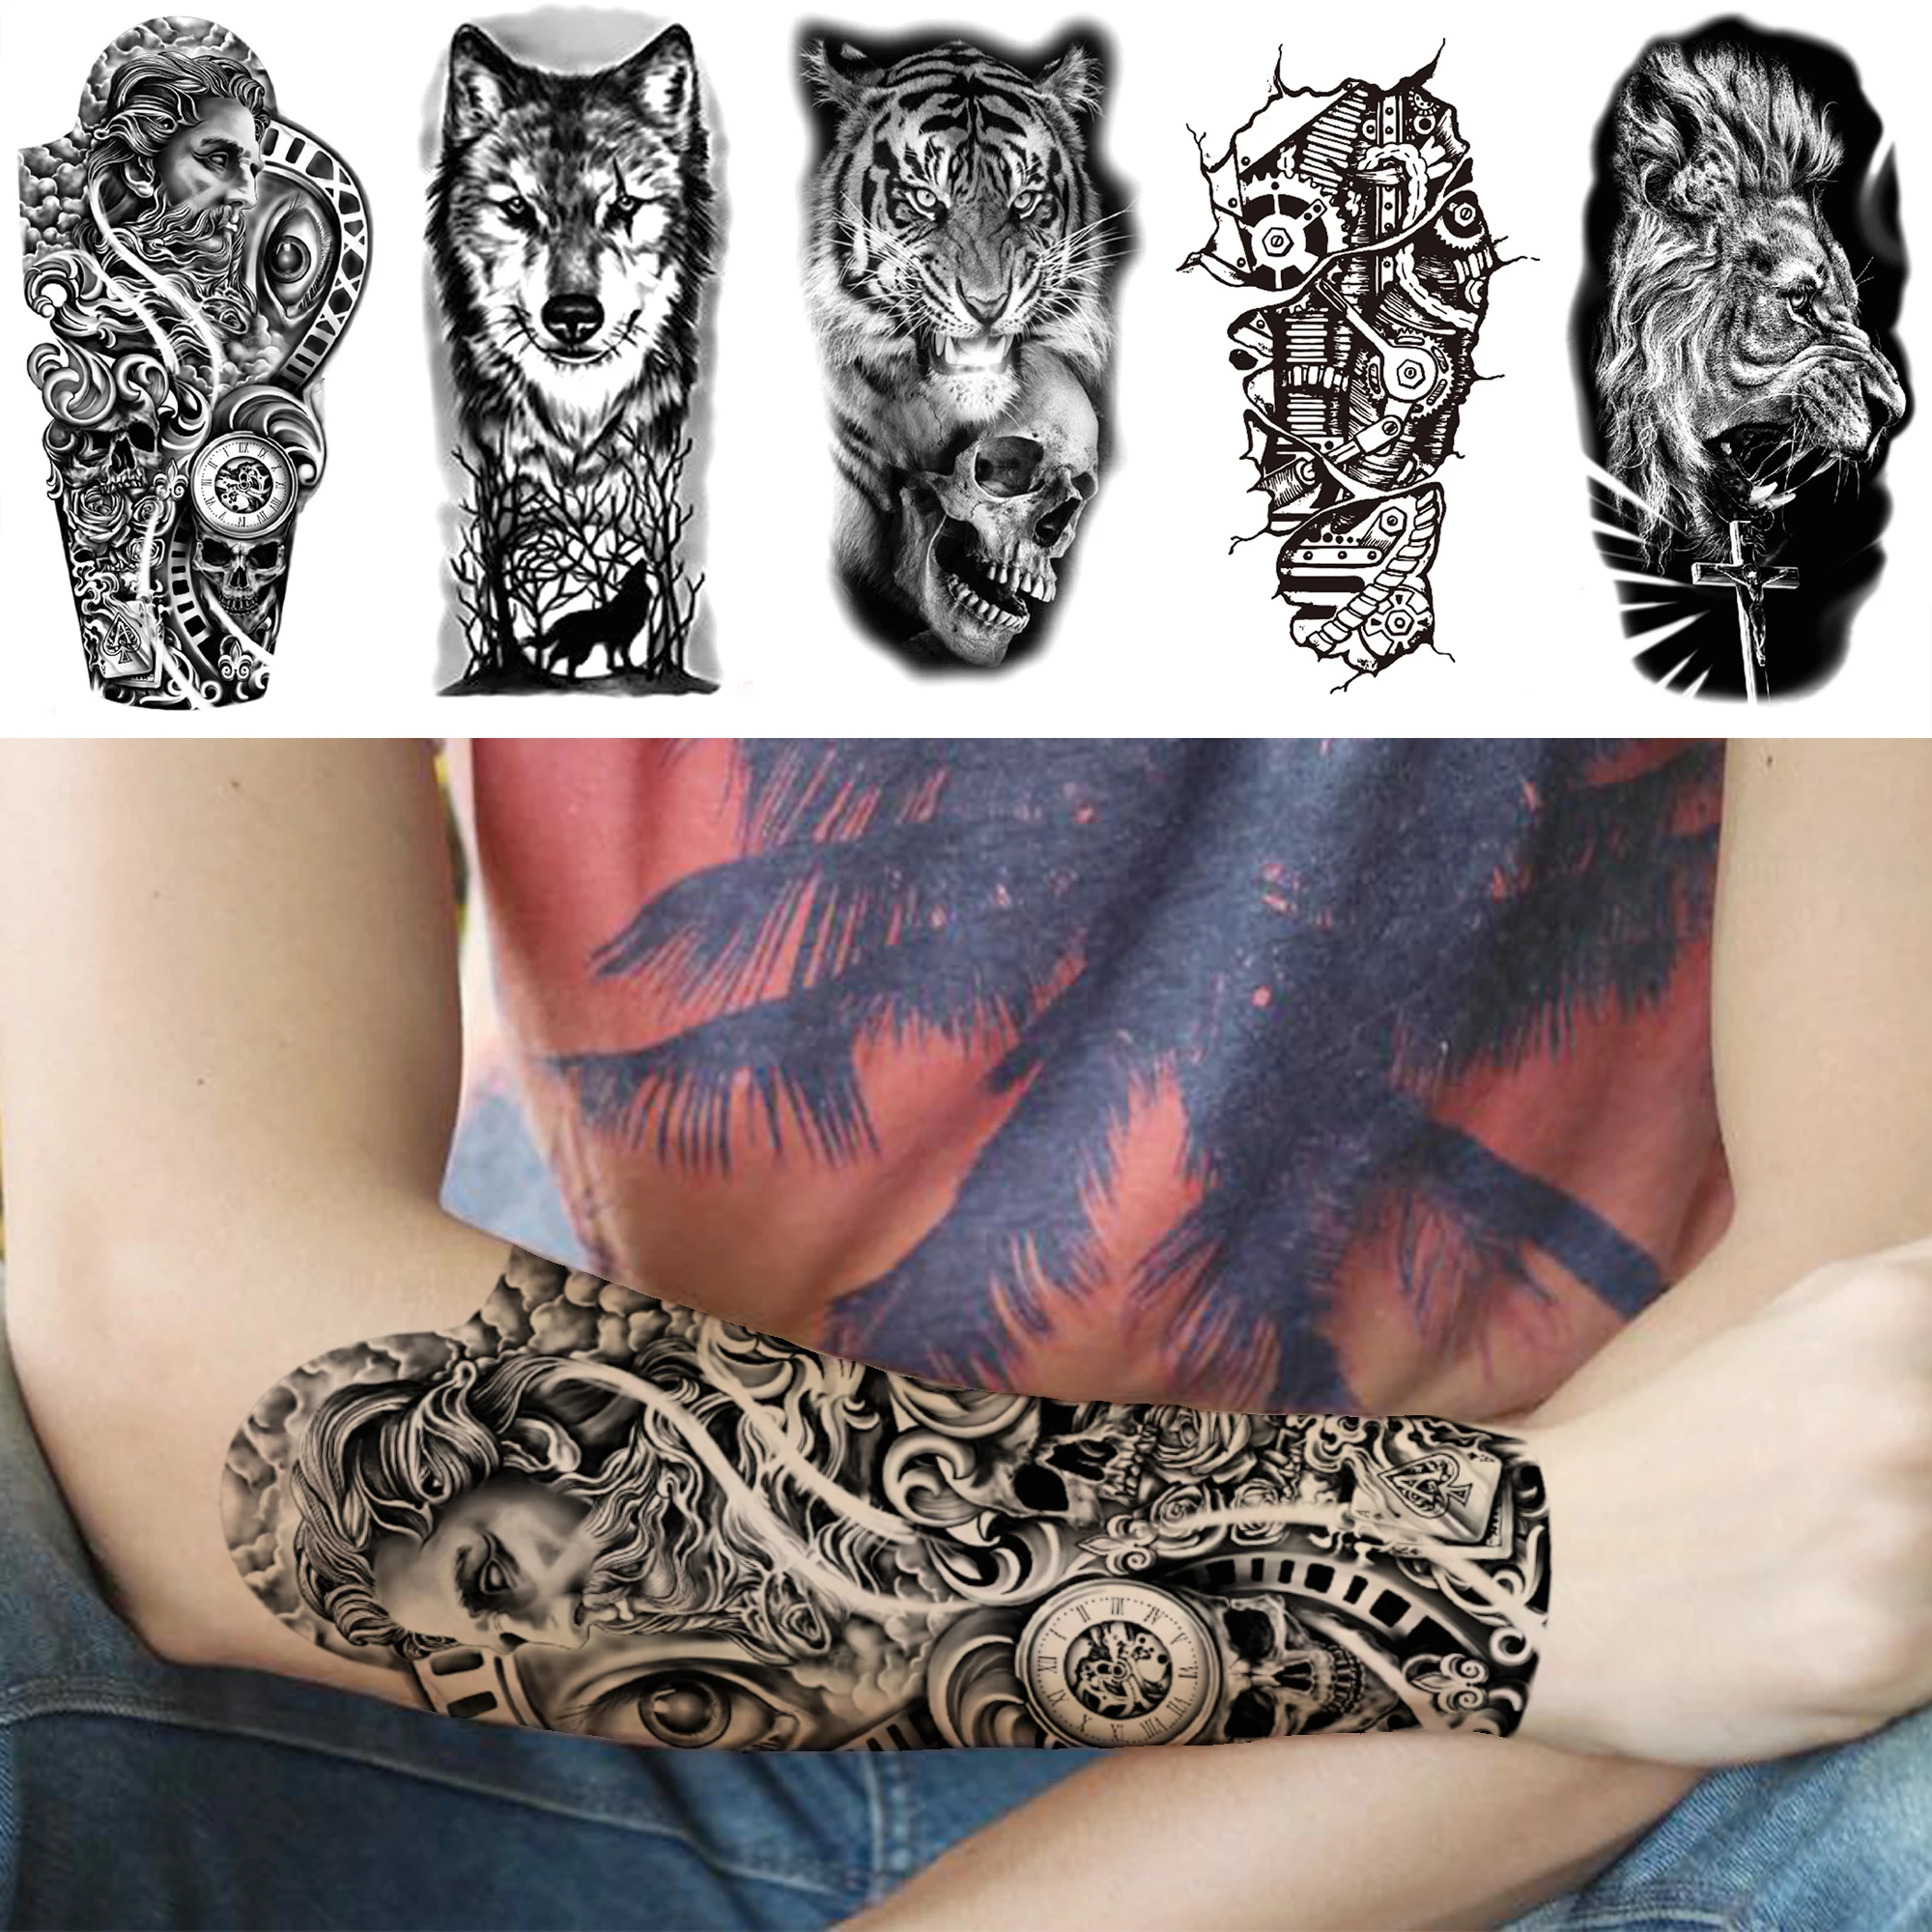 

Gear God Temporary Tattoo For Men Women Adult Black Tiger Skull Lion Tattoos Sticker Realistic Fake Wolf Forest Tatoo Arm Leg